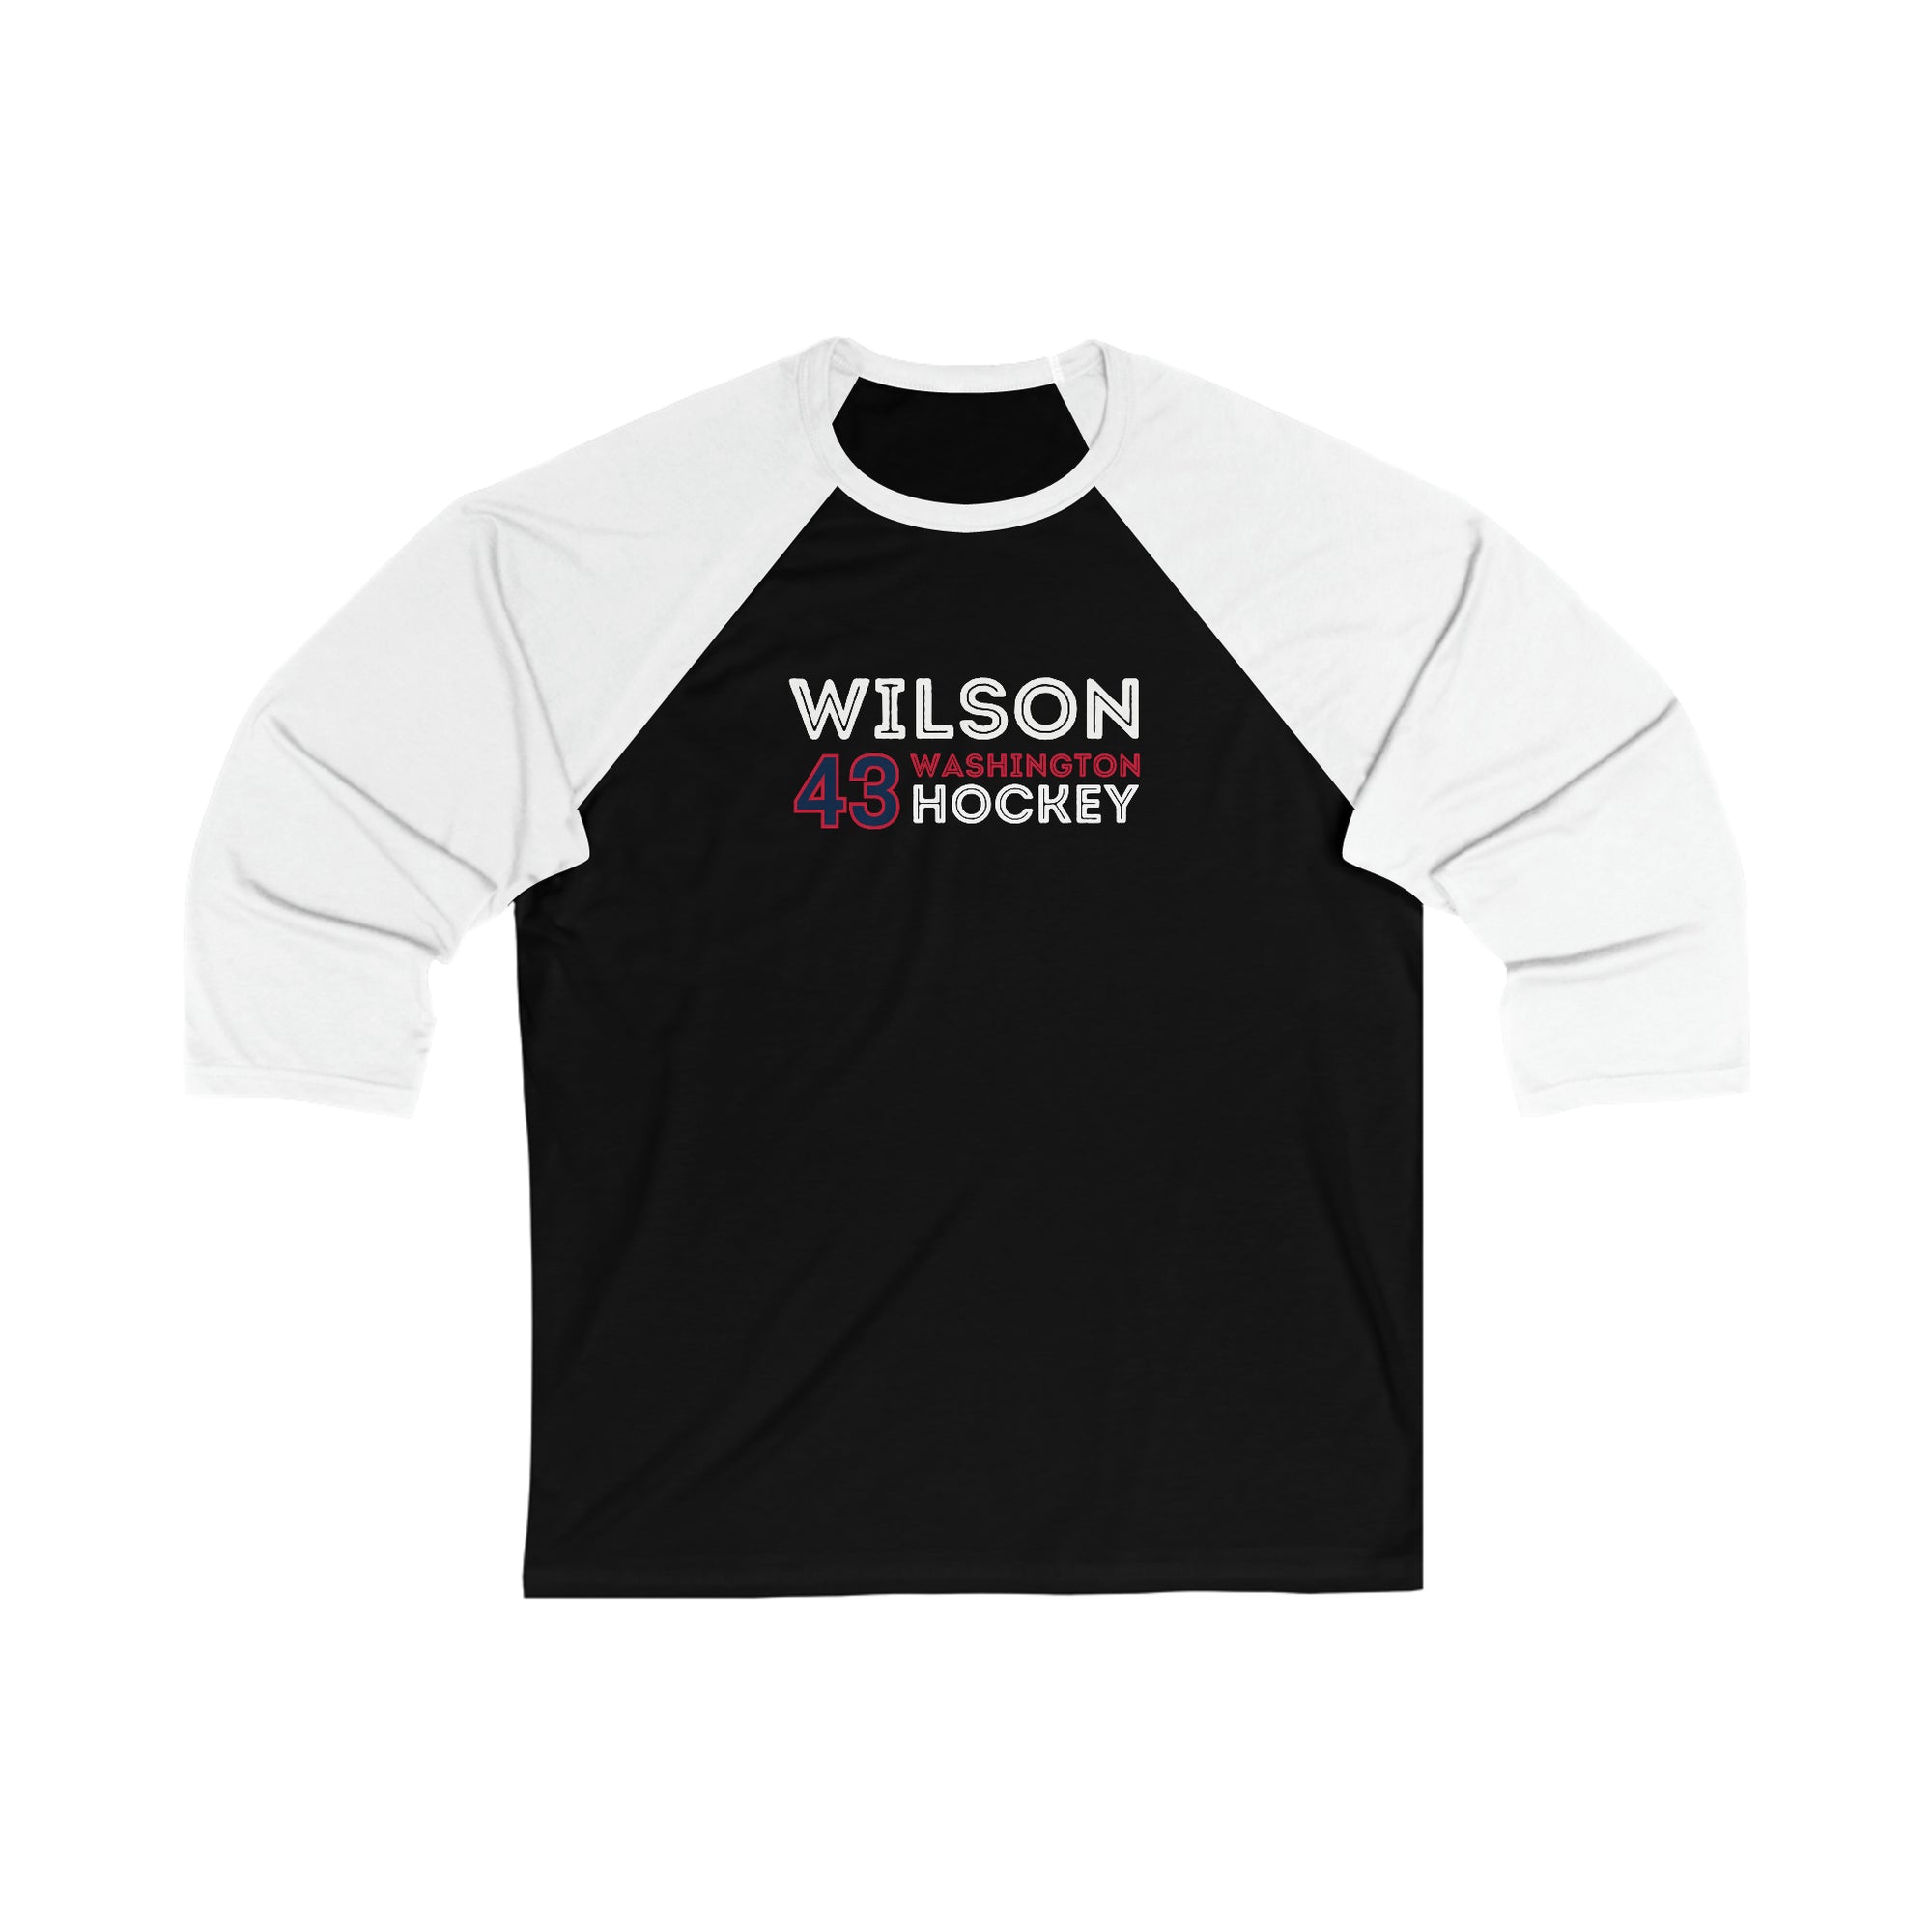 Wilson 43 Washington Hockey Grafitti Wall Design Unisex Tri-Blend 3/4 Sleeve Raglan Baseball Shirt